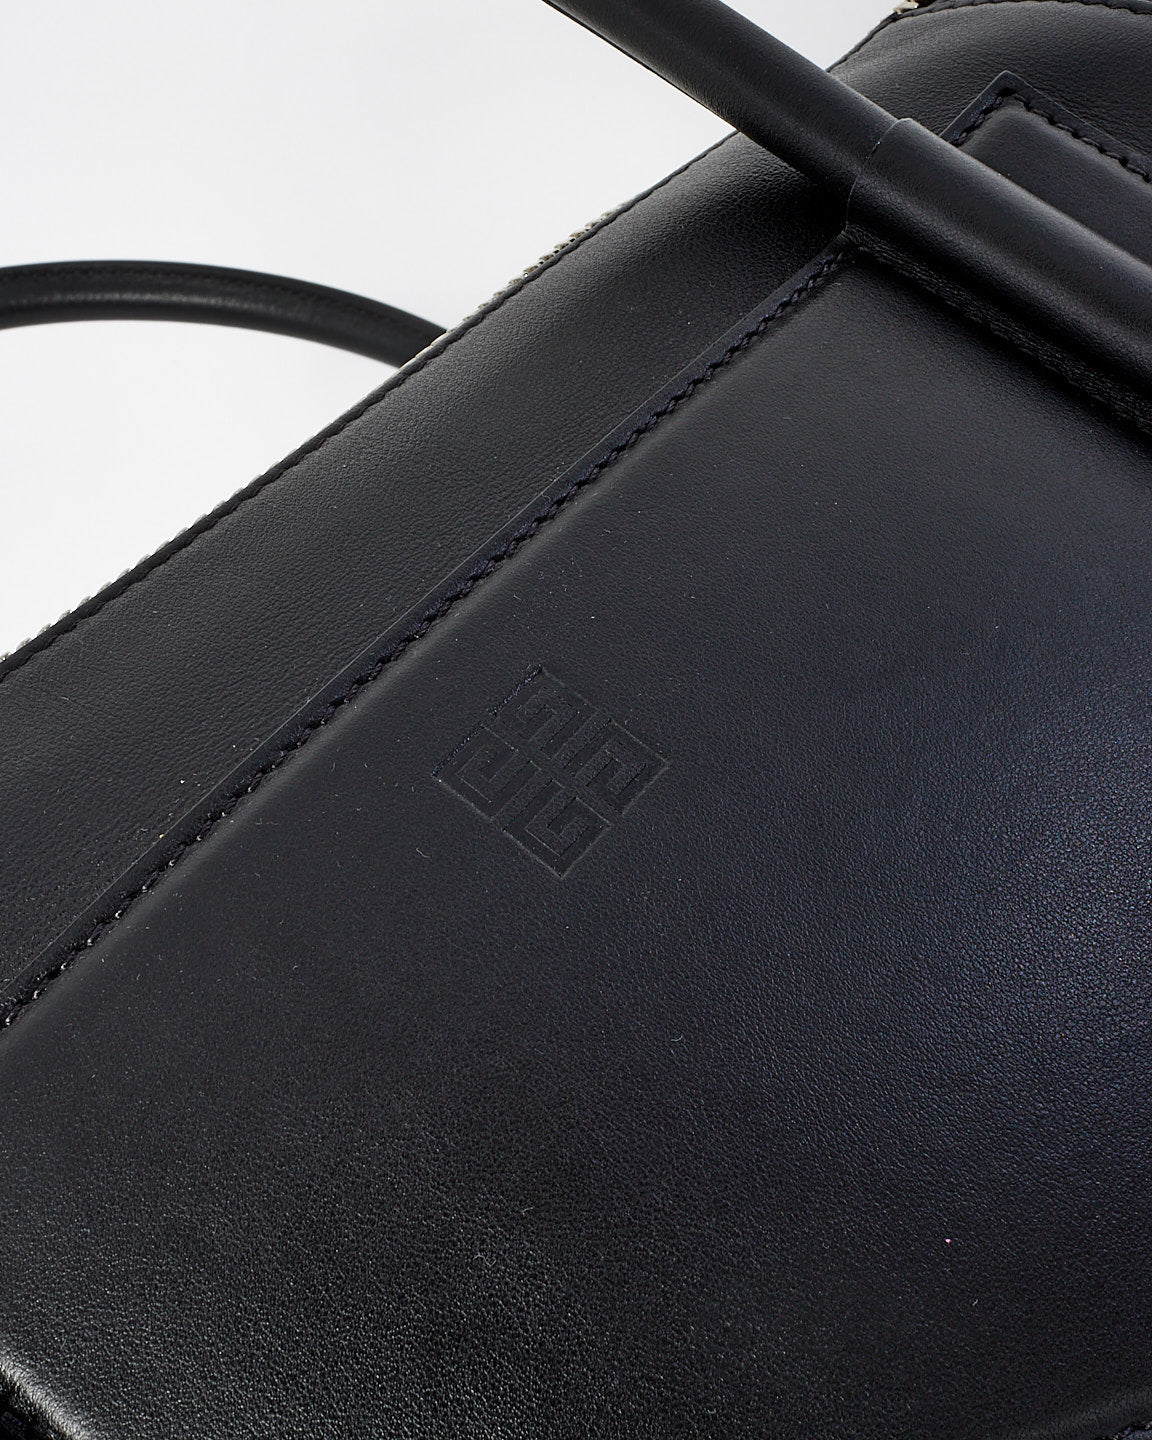 Givenchy Black Smooth Leather  Medium Antigona Lock Soft Bag